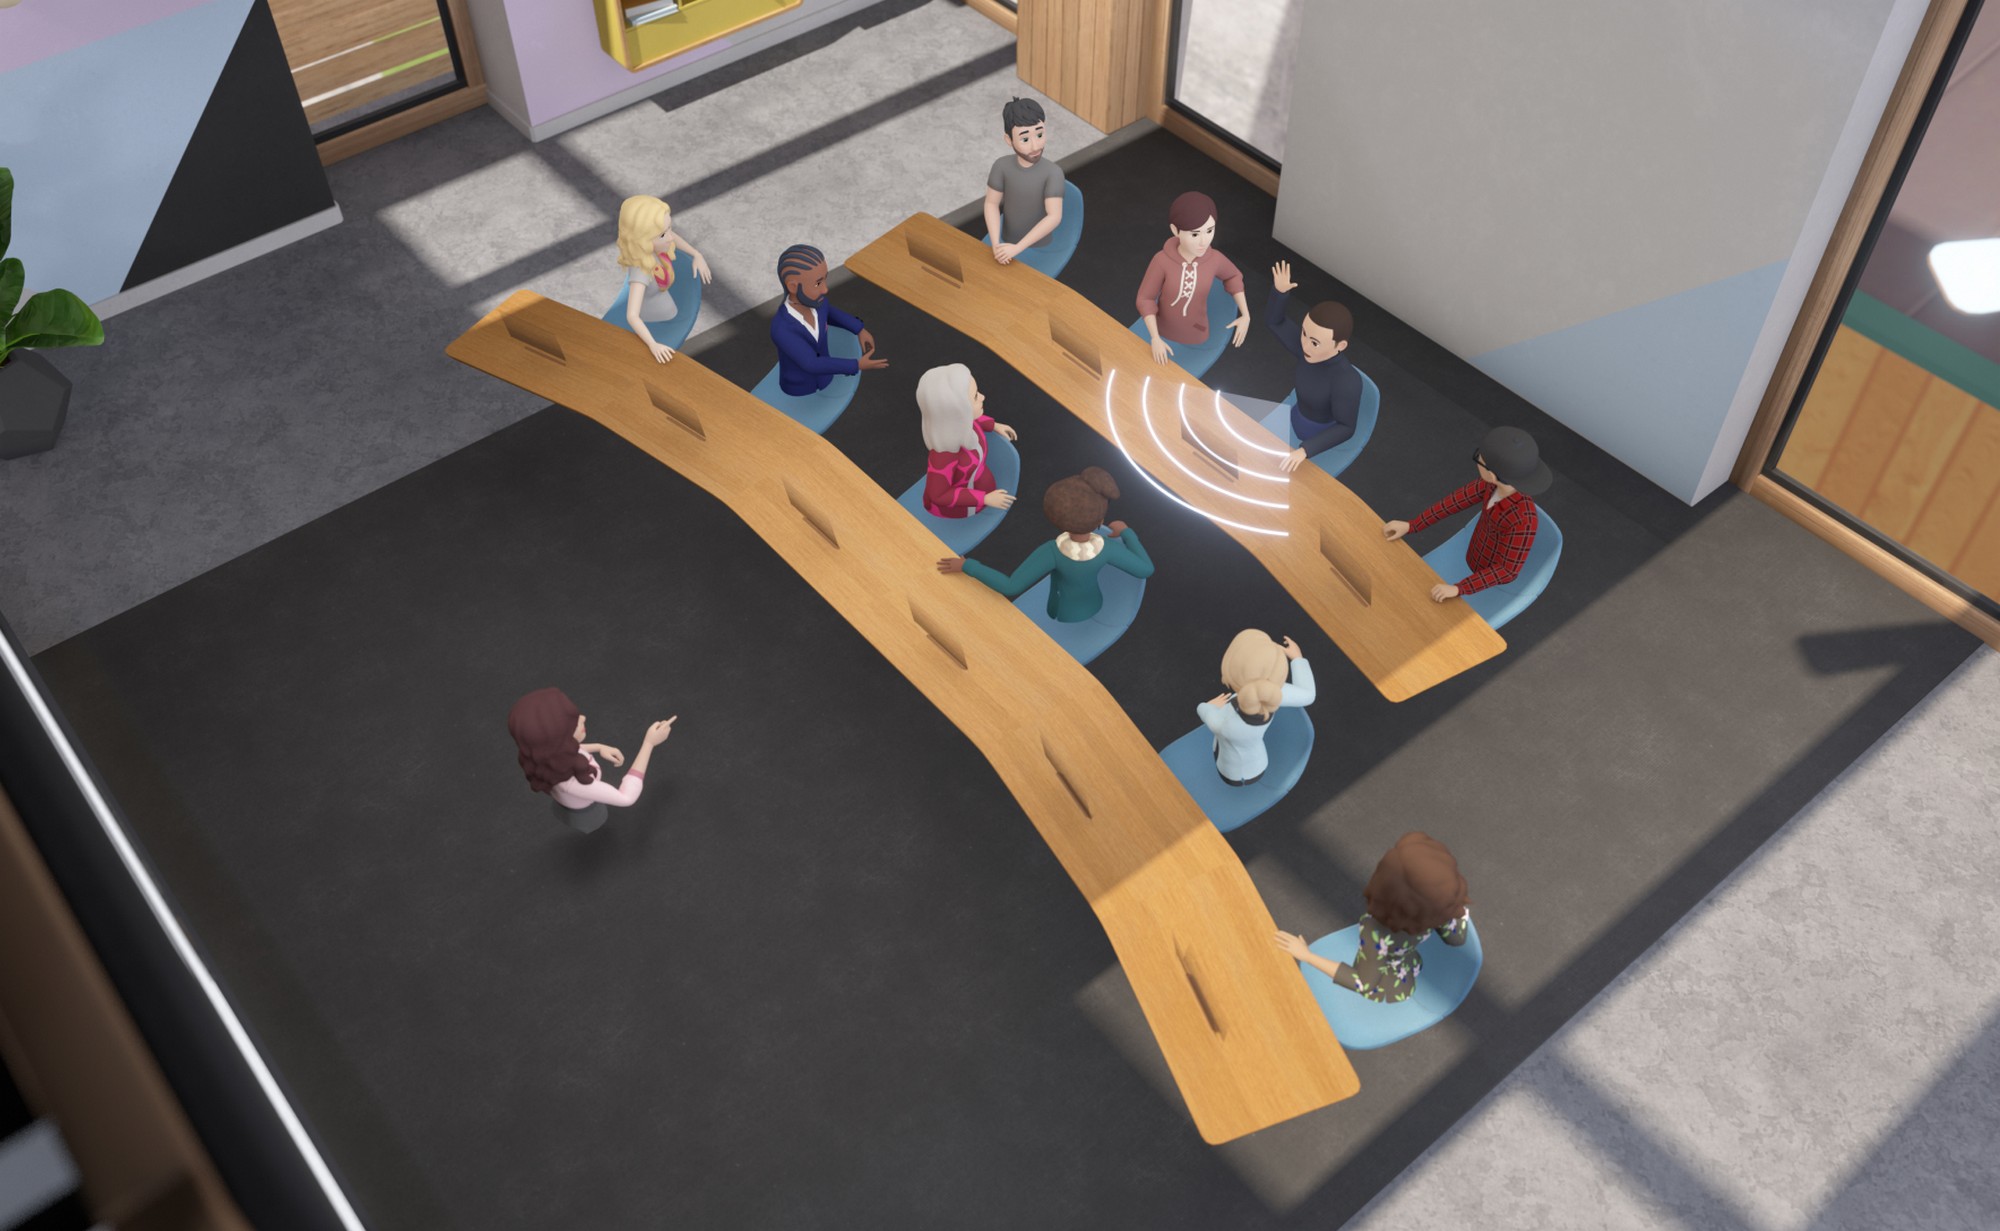 Facebook Announces Workrooms, a Collaborative VR Space